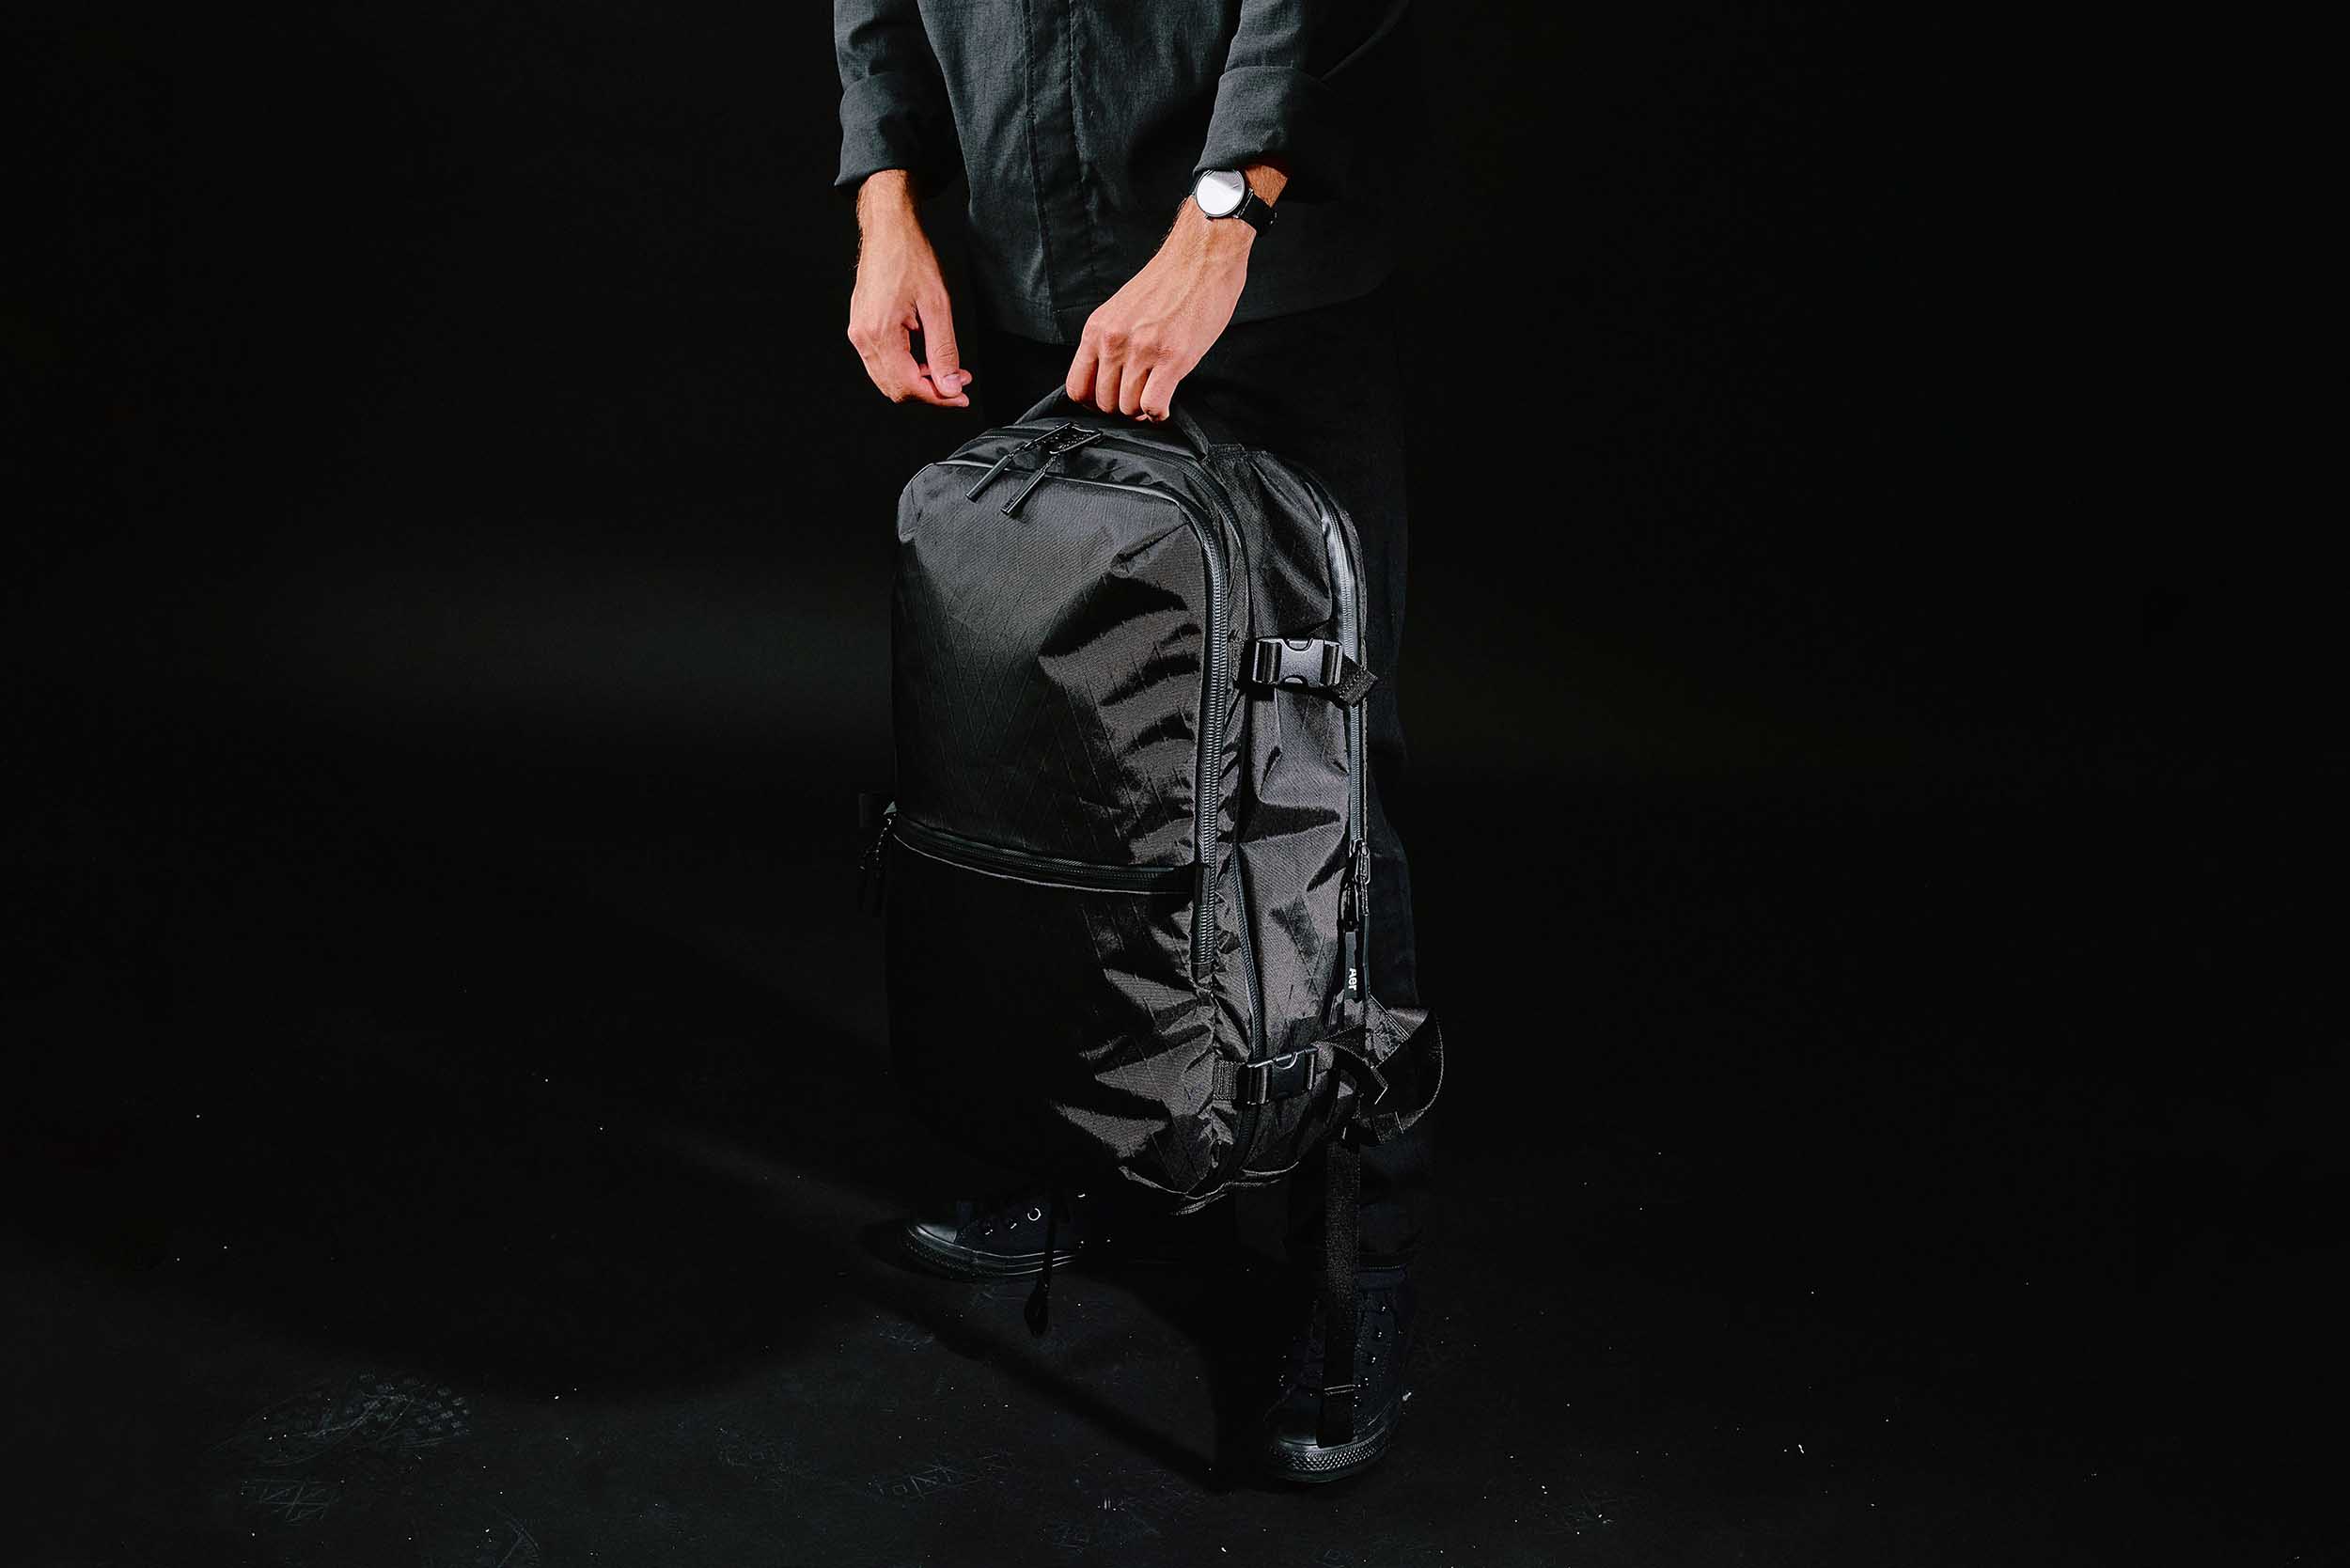 Travel Pack 2 X-Pac - Black — Aer | Modern gym bags, travel